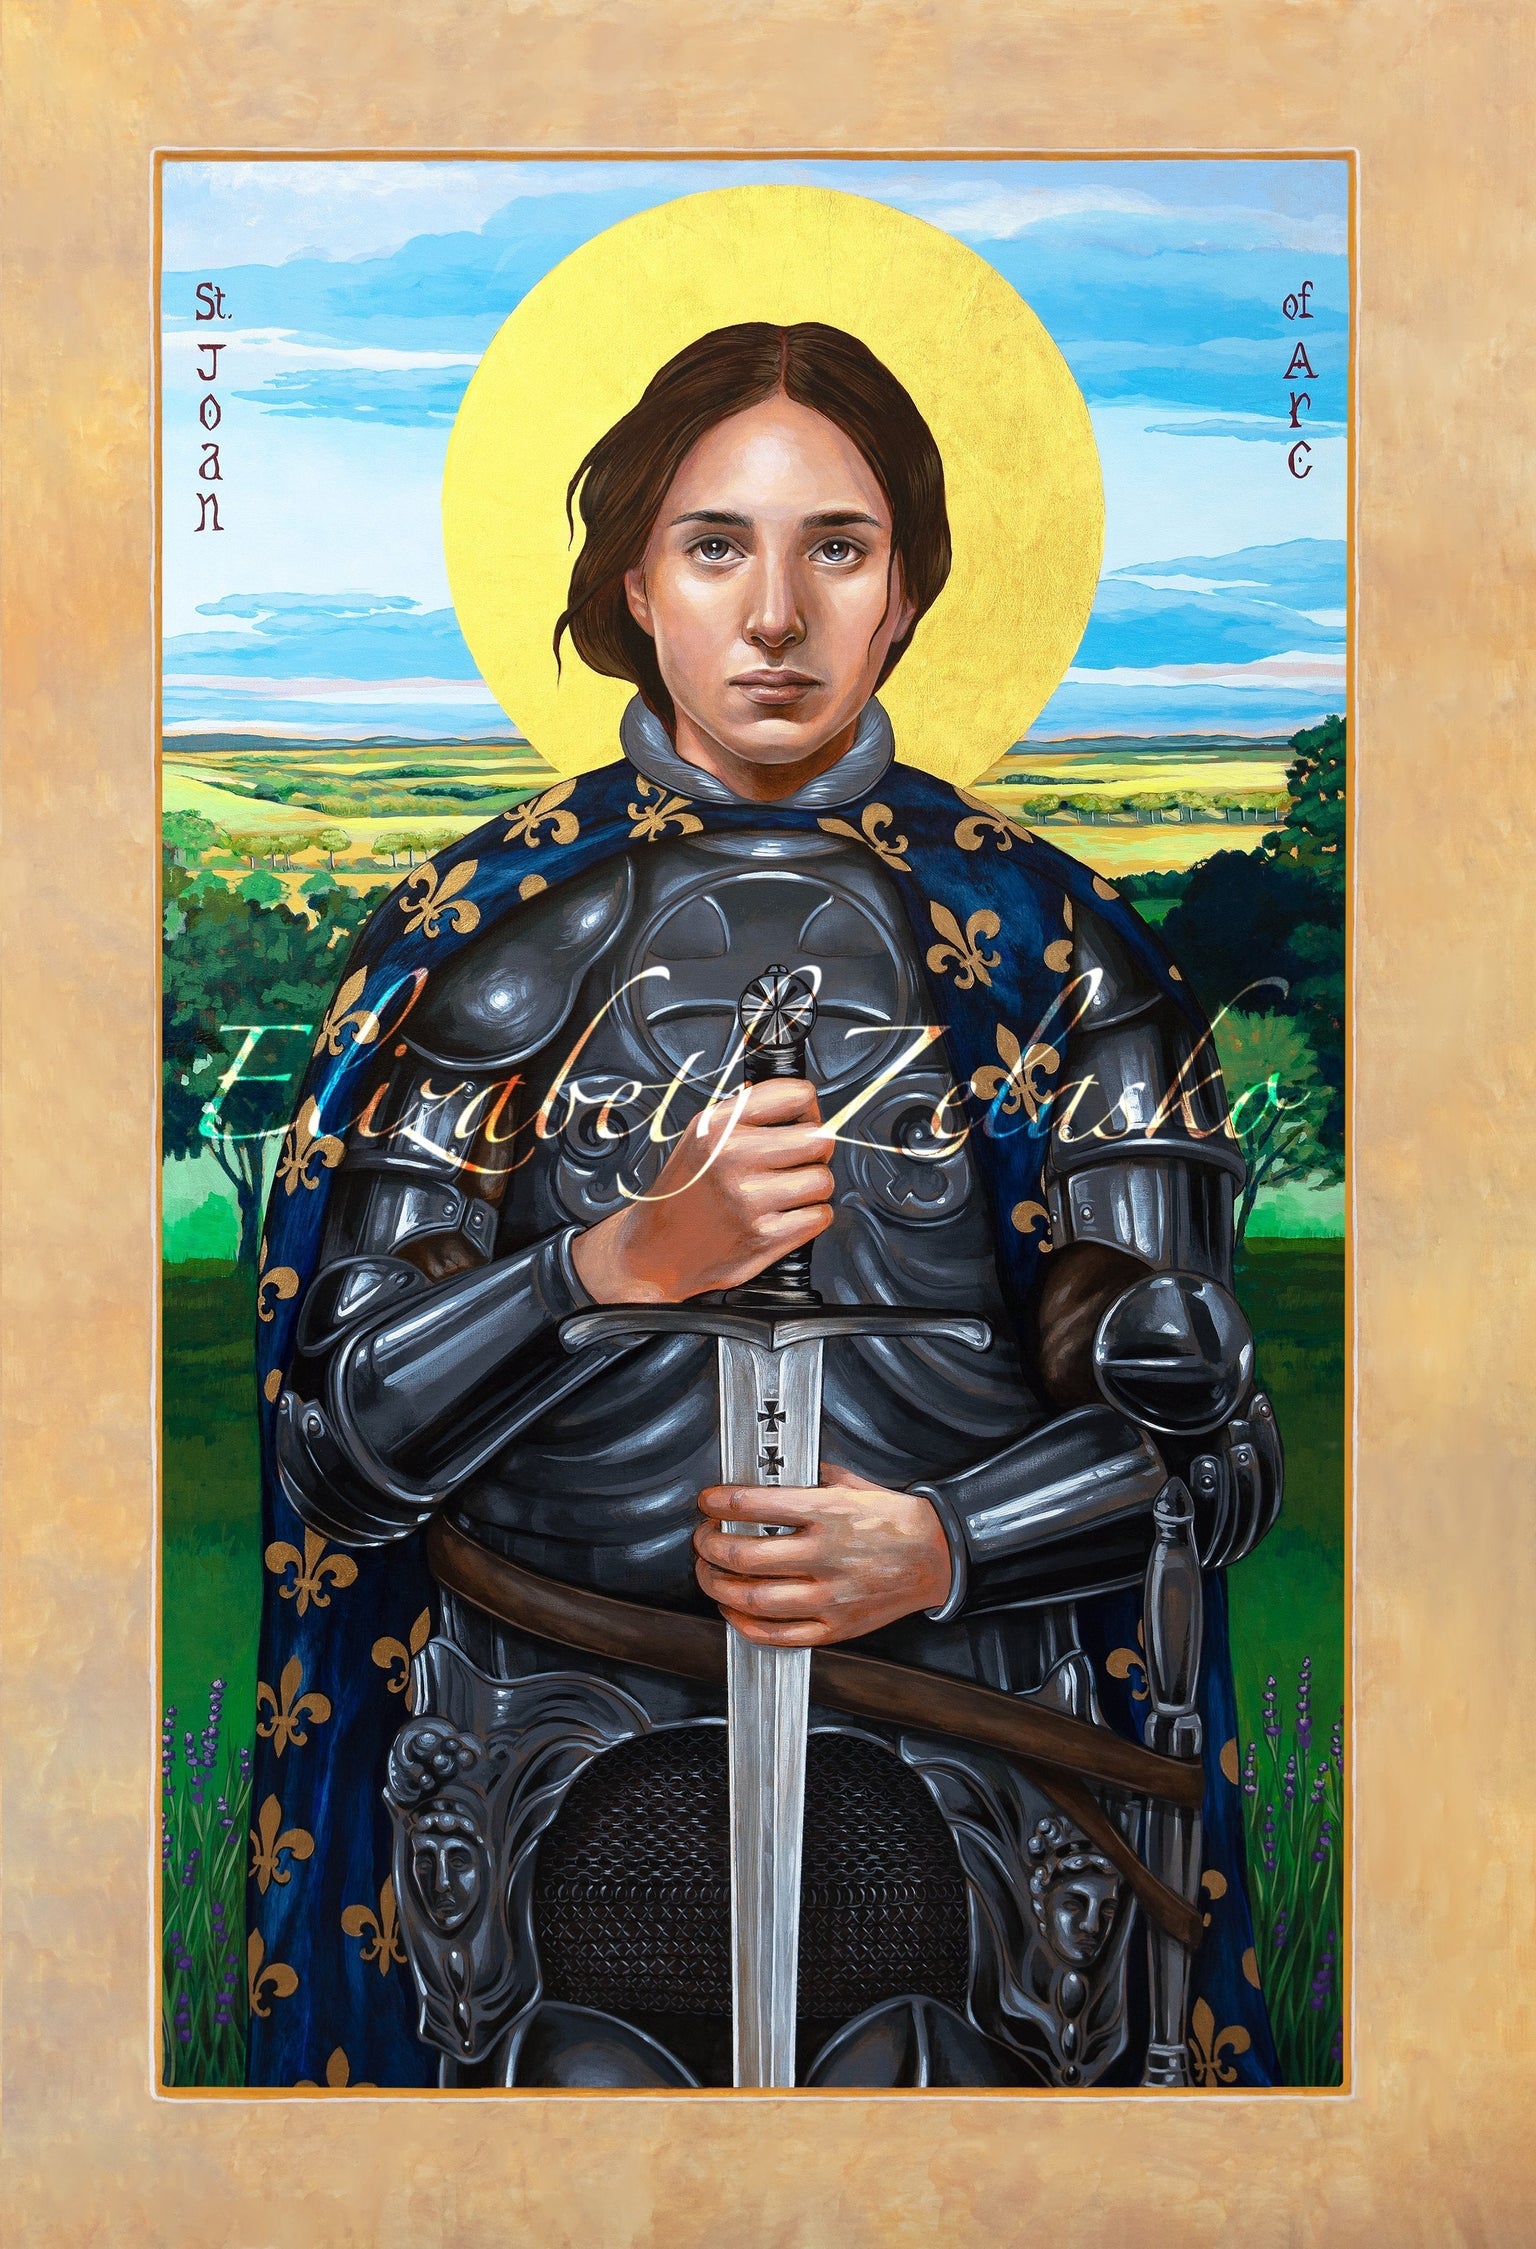 Saint Joan of Arc Print